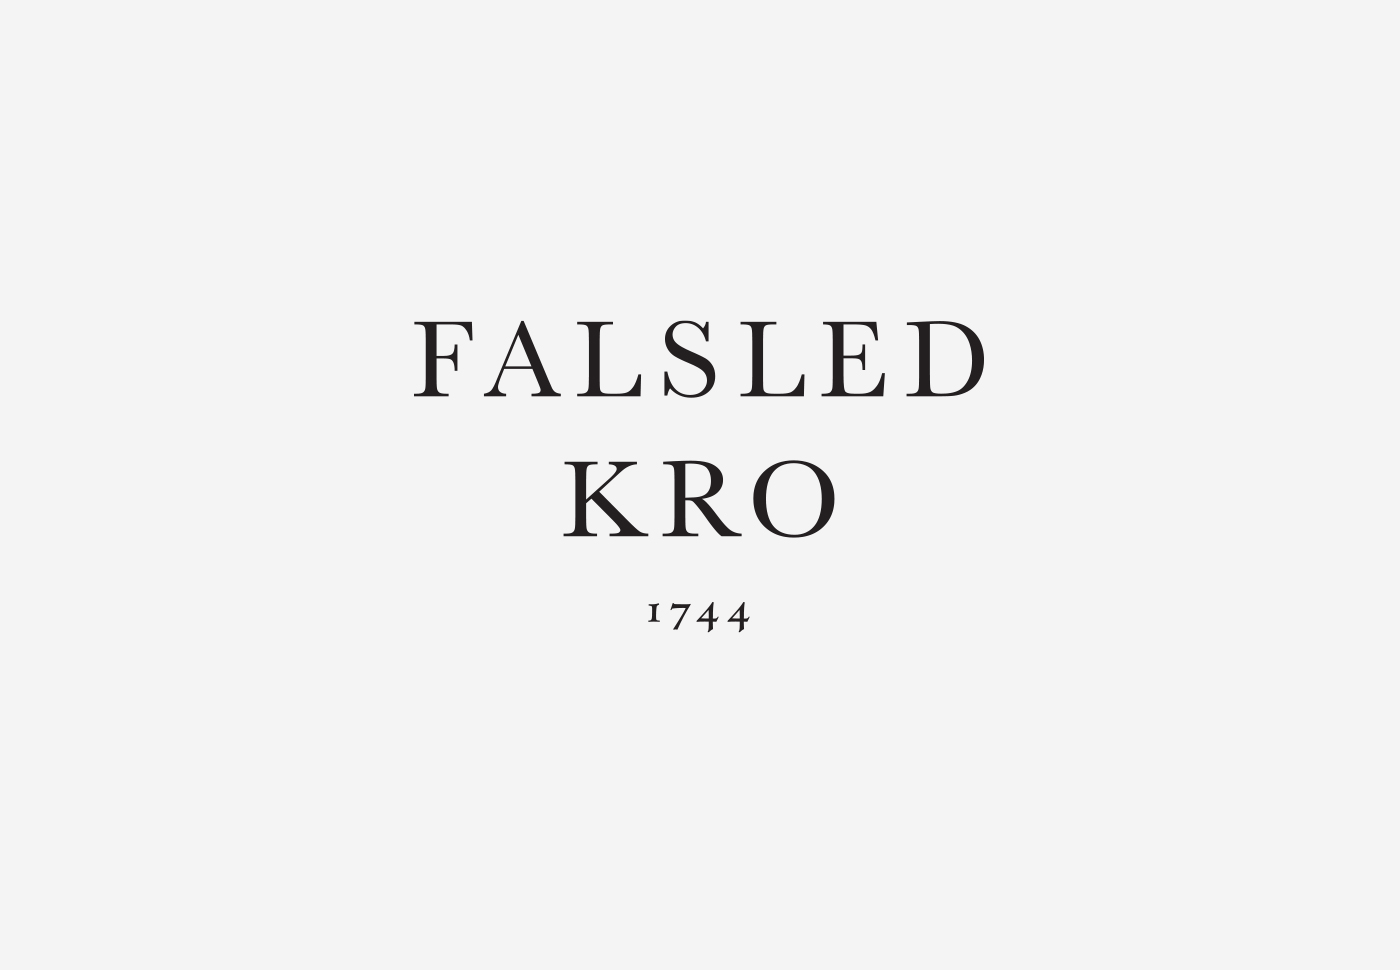 Falsled Kro – Brand identity